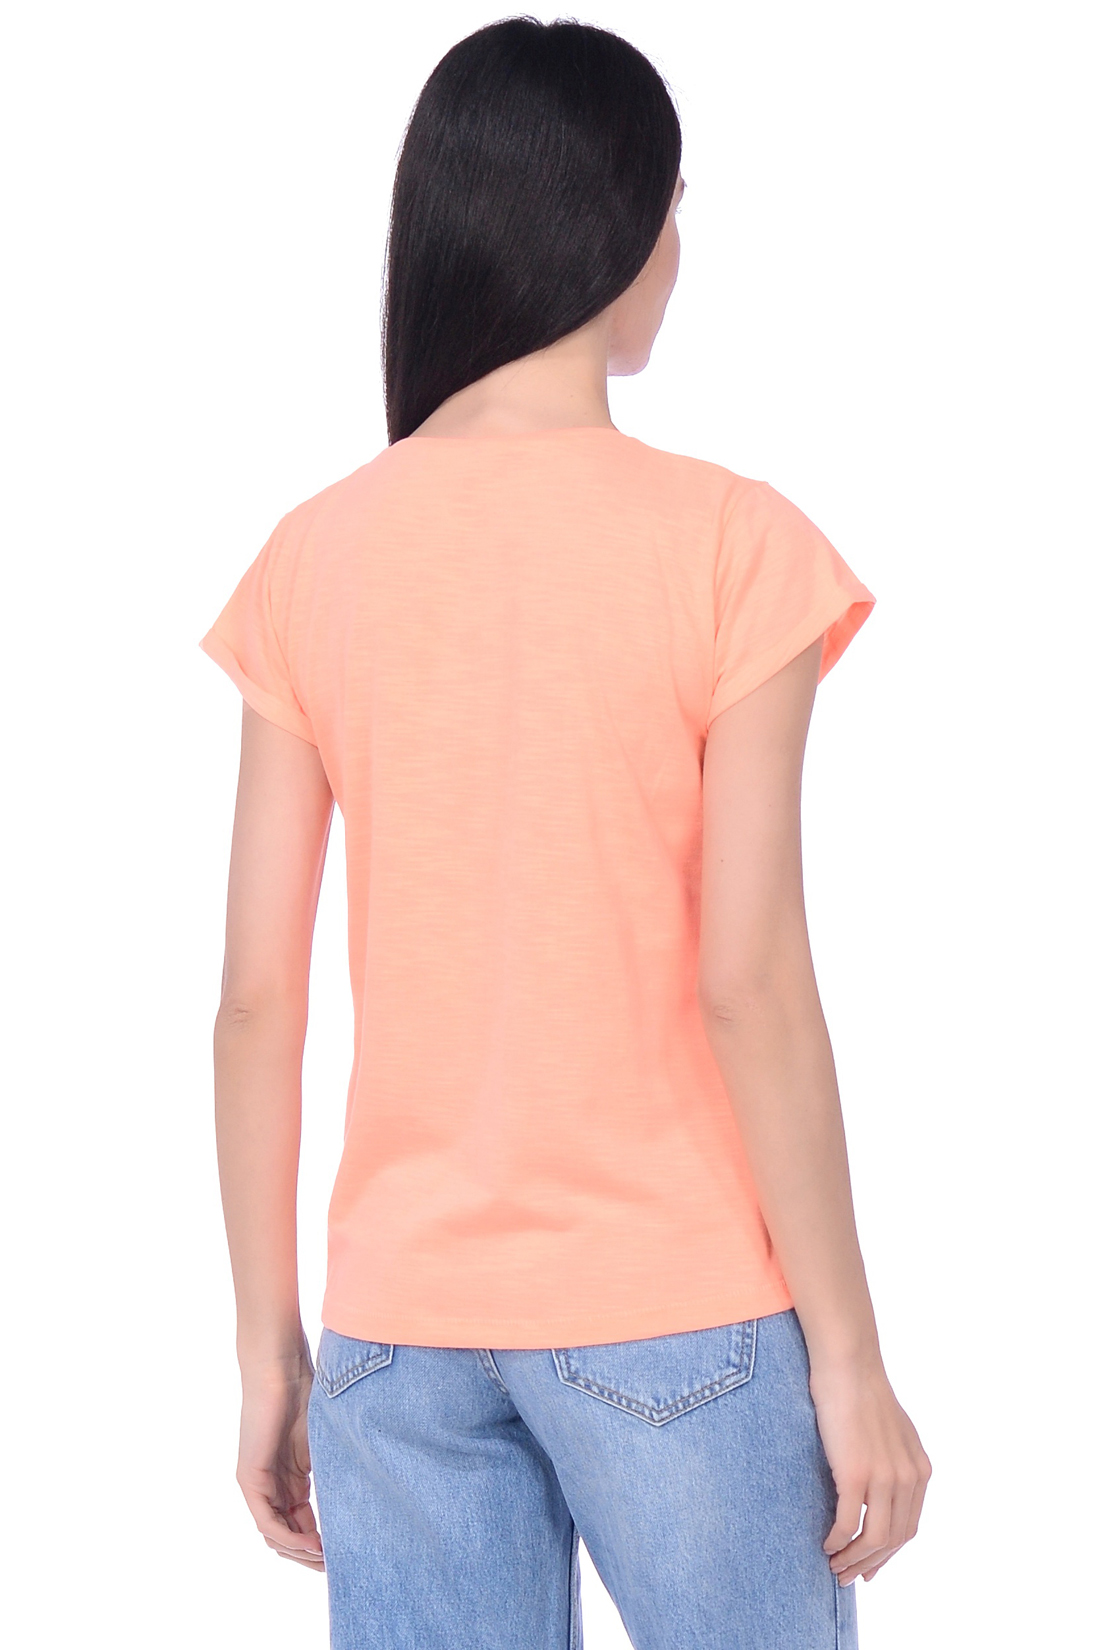 Оранжевая футболка с надписью (арт. baon B239085), размер S, цвет оранжевый Оранжевая футболка с надписью (арт. baon B239085) - фото 2